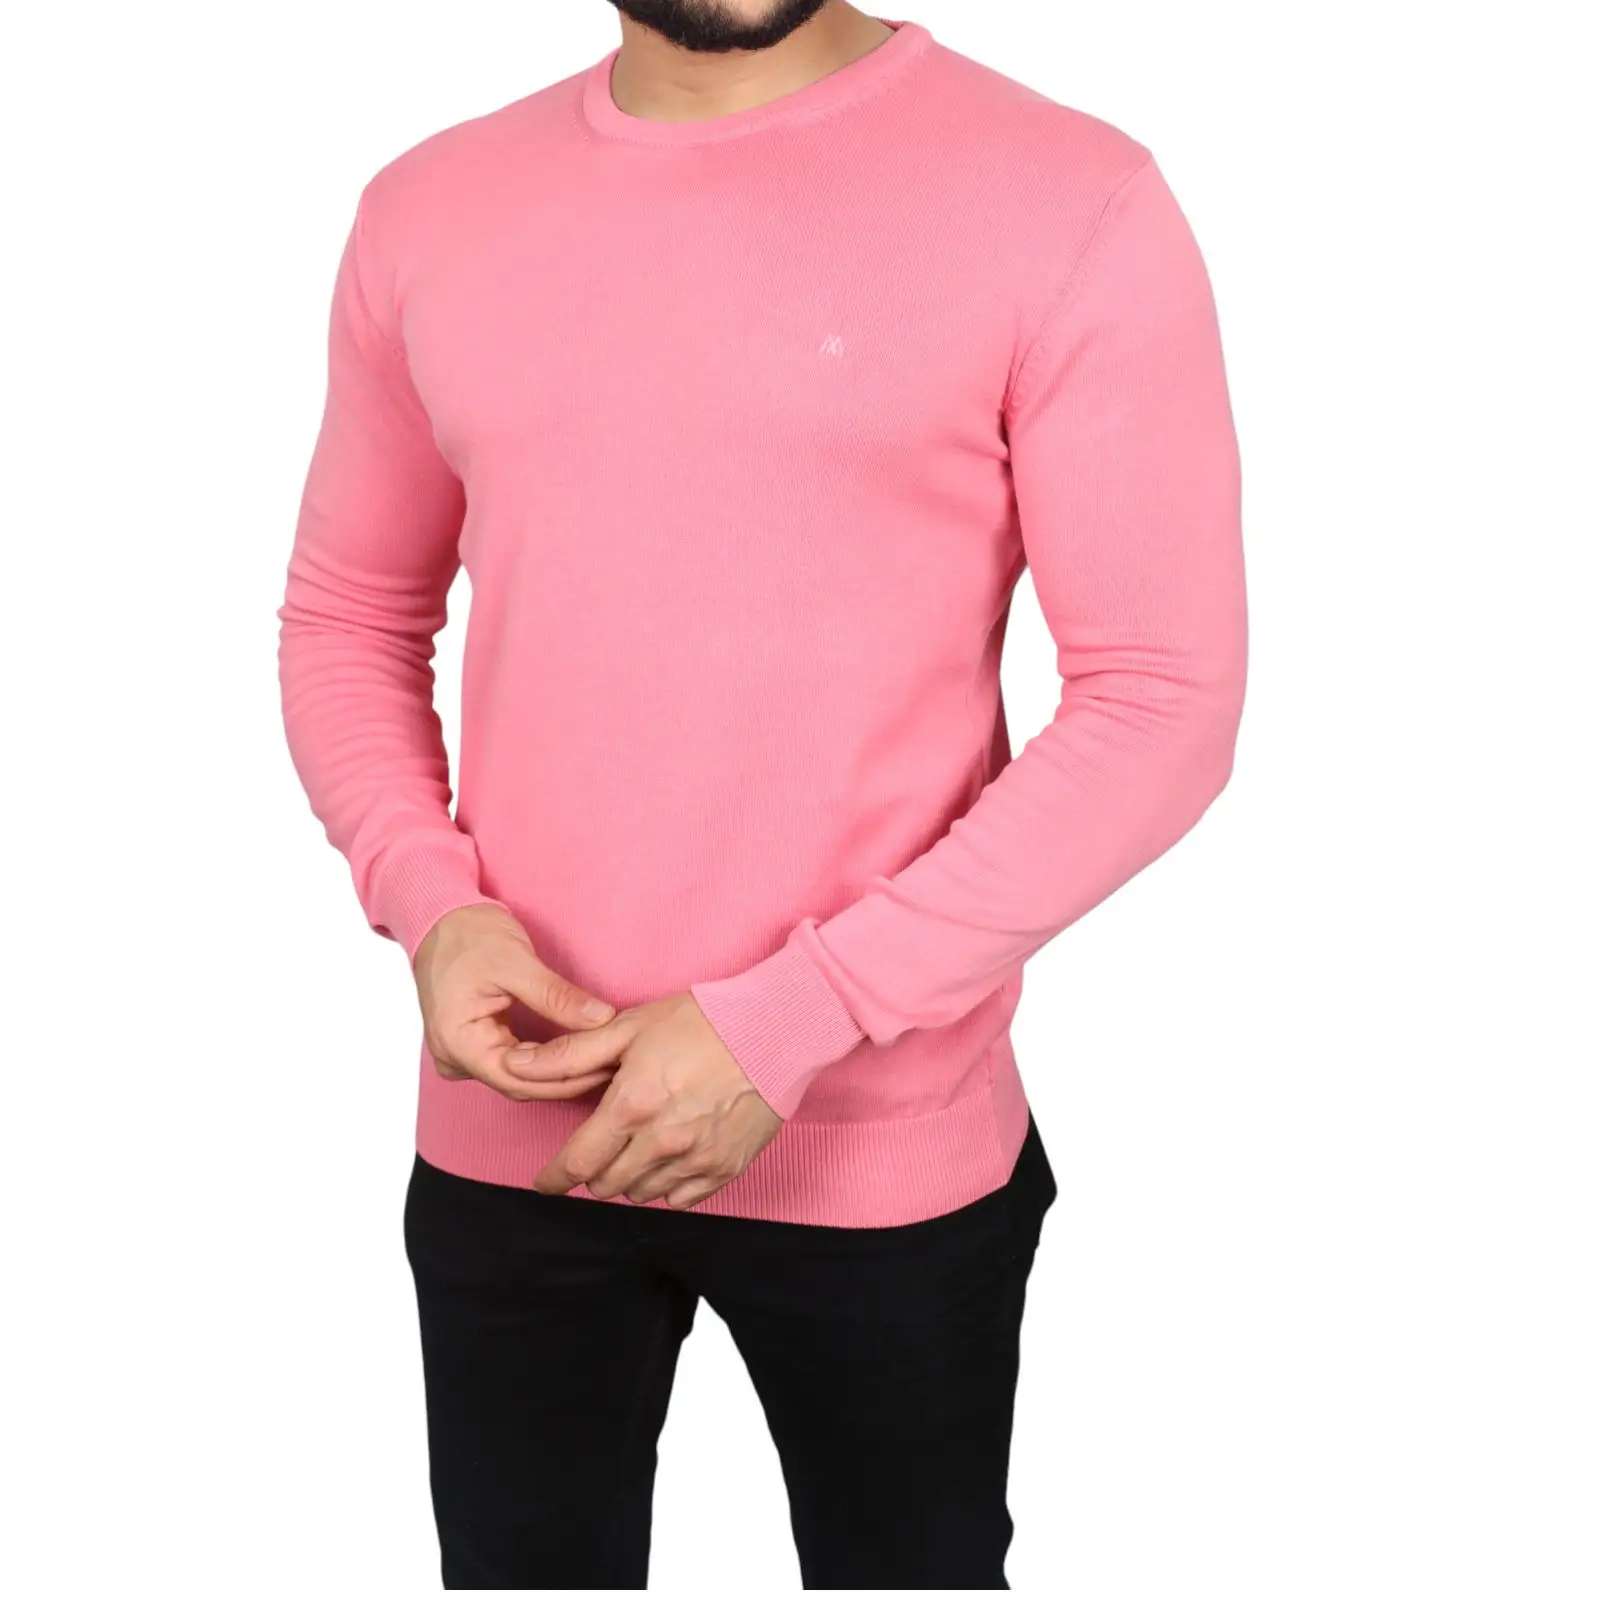 100% Cotton Mens Sweatshirt Fabric Cotton High Quality New Season O Neck Slim Fit Long Sleeve Pink Knitwear Full Color